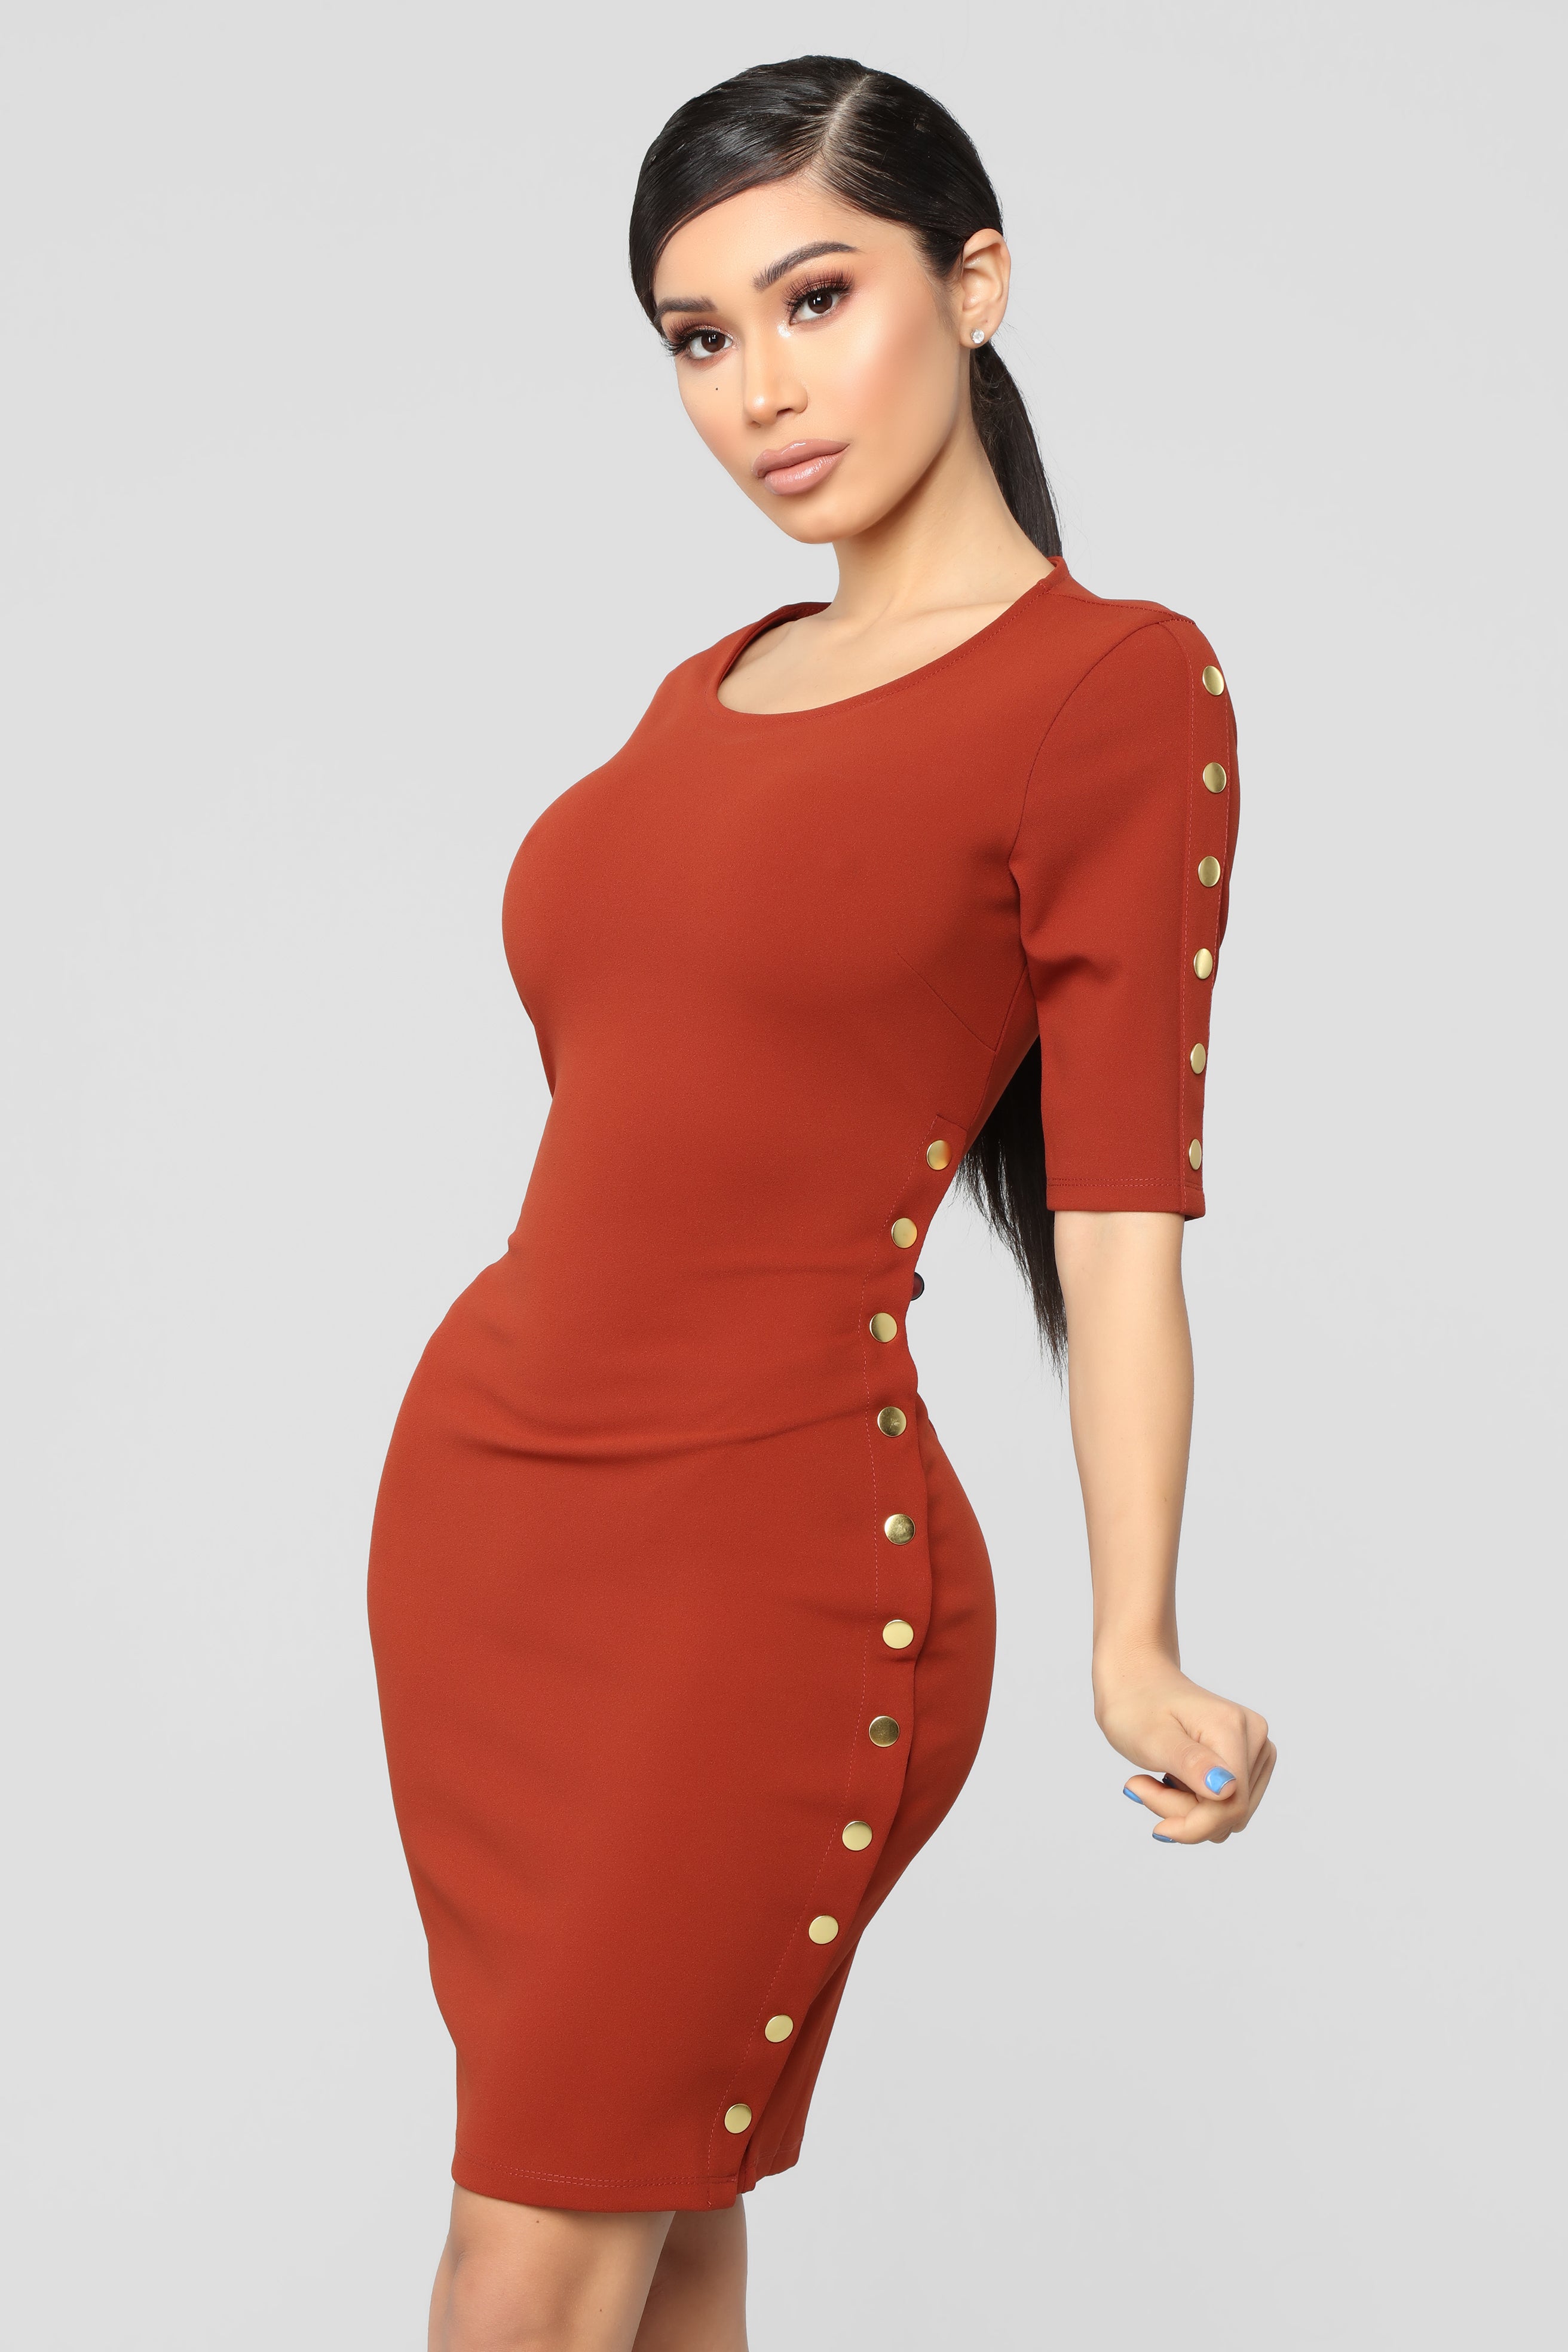 Don't Make Me Snap Sweater Dress - Rust – Fashion Nova